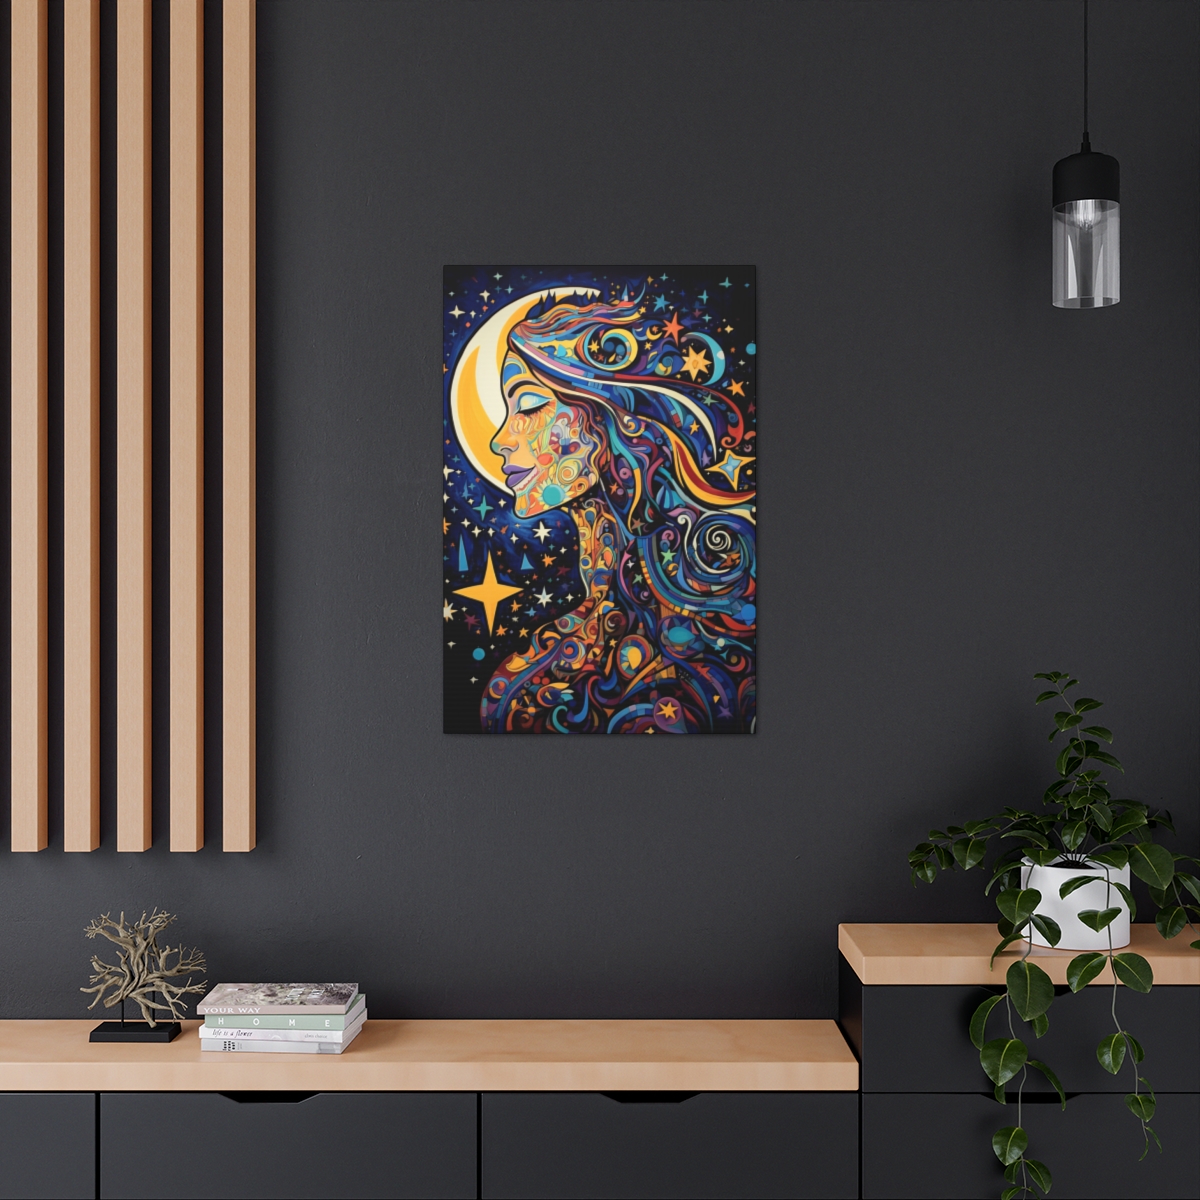 Dreamy Moon Art: The Great Goddess